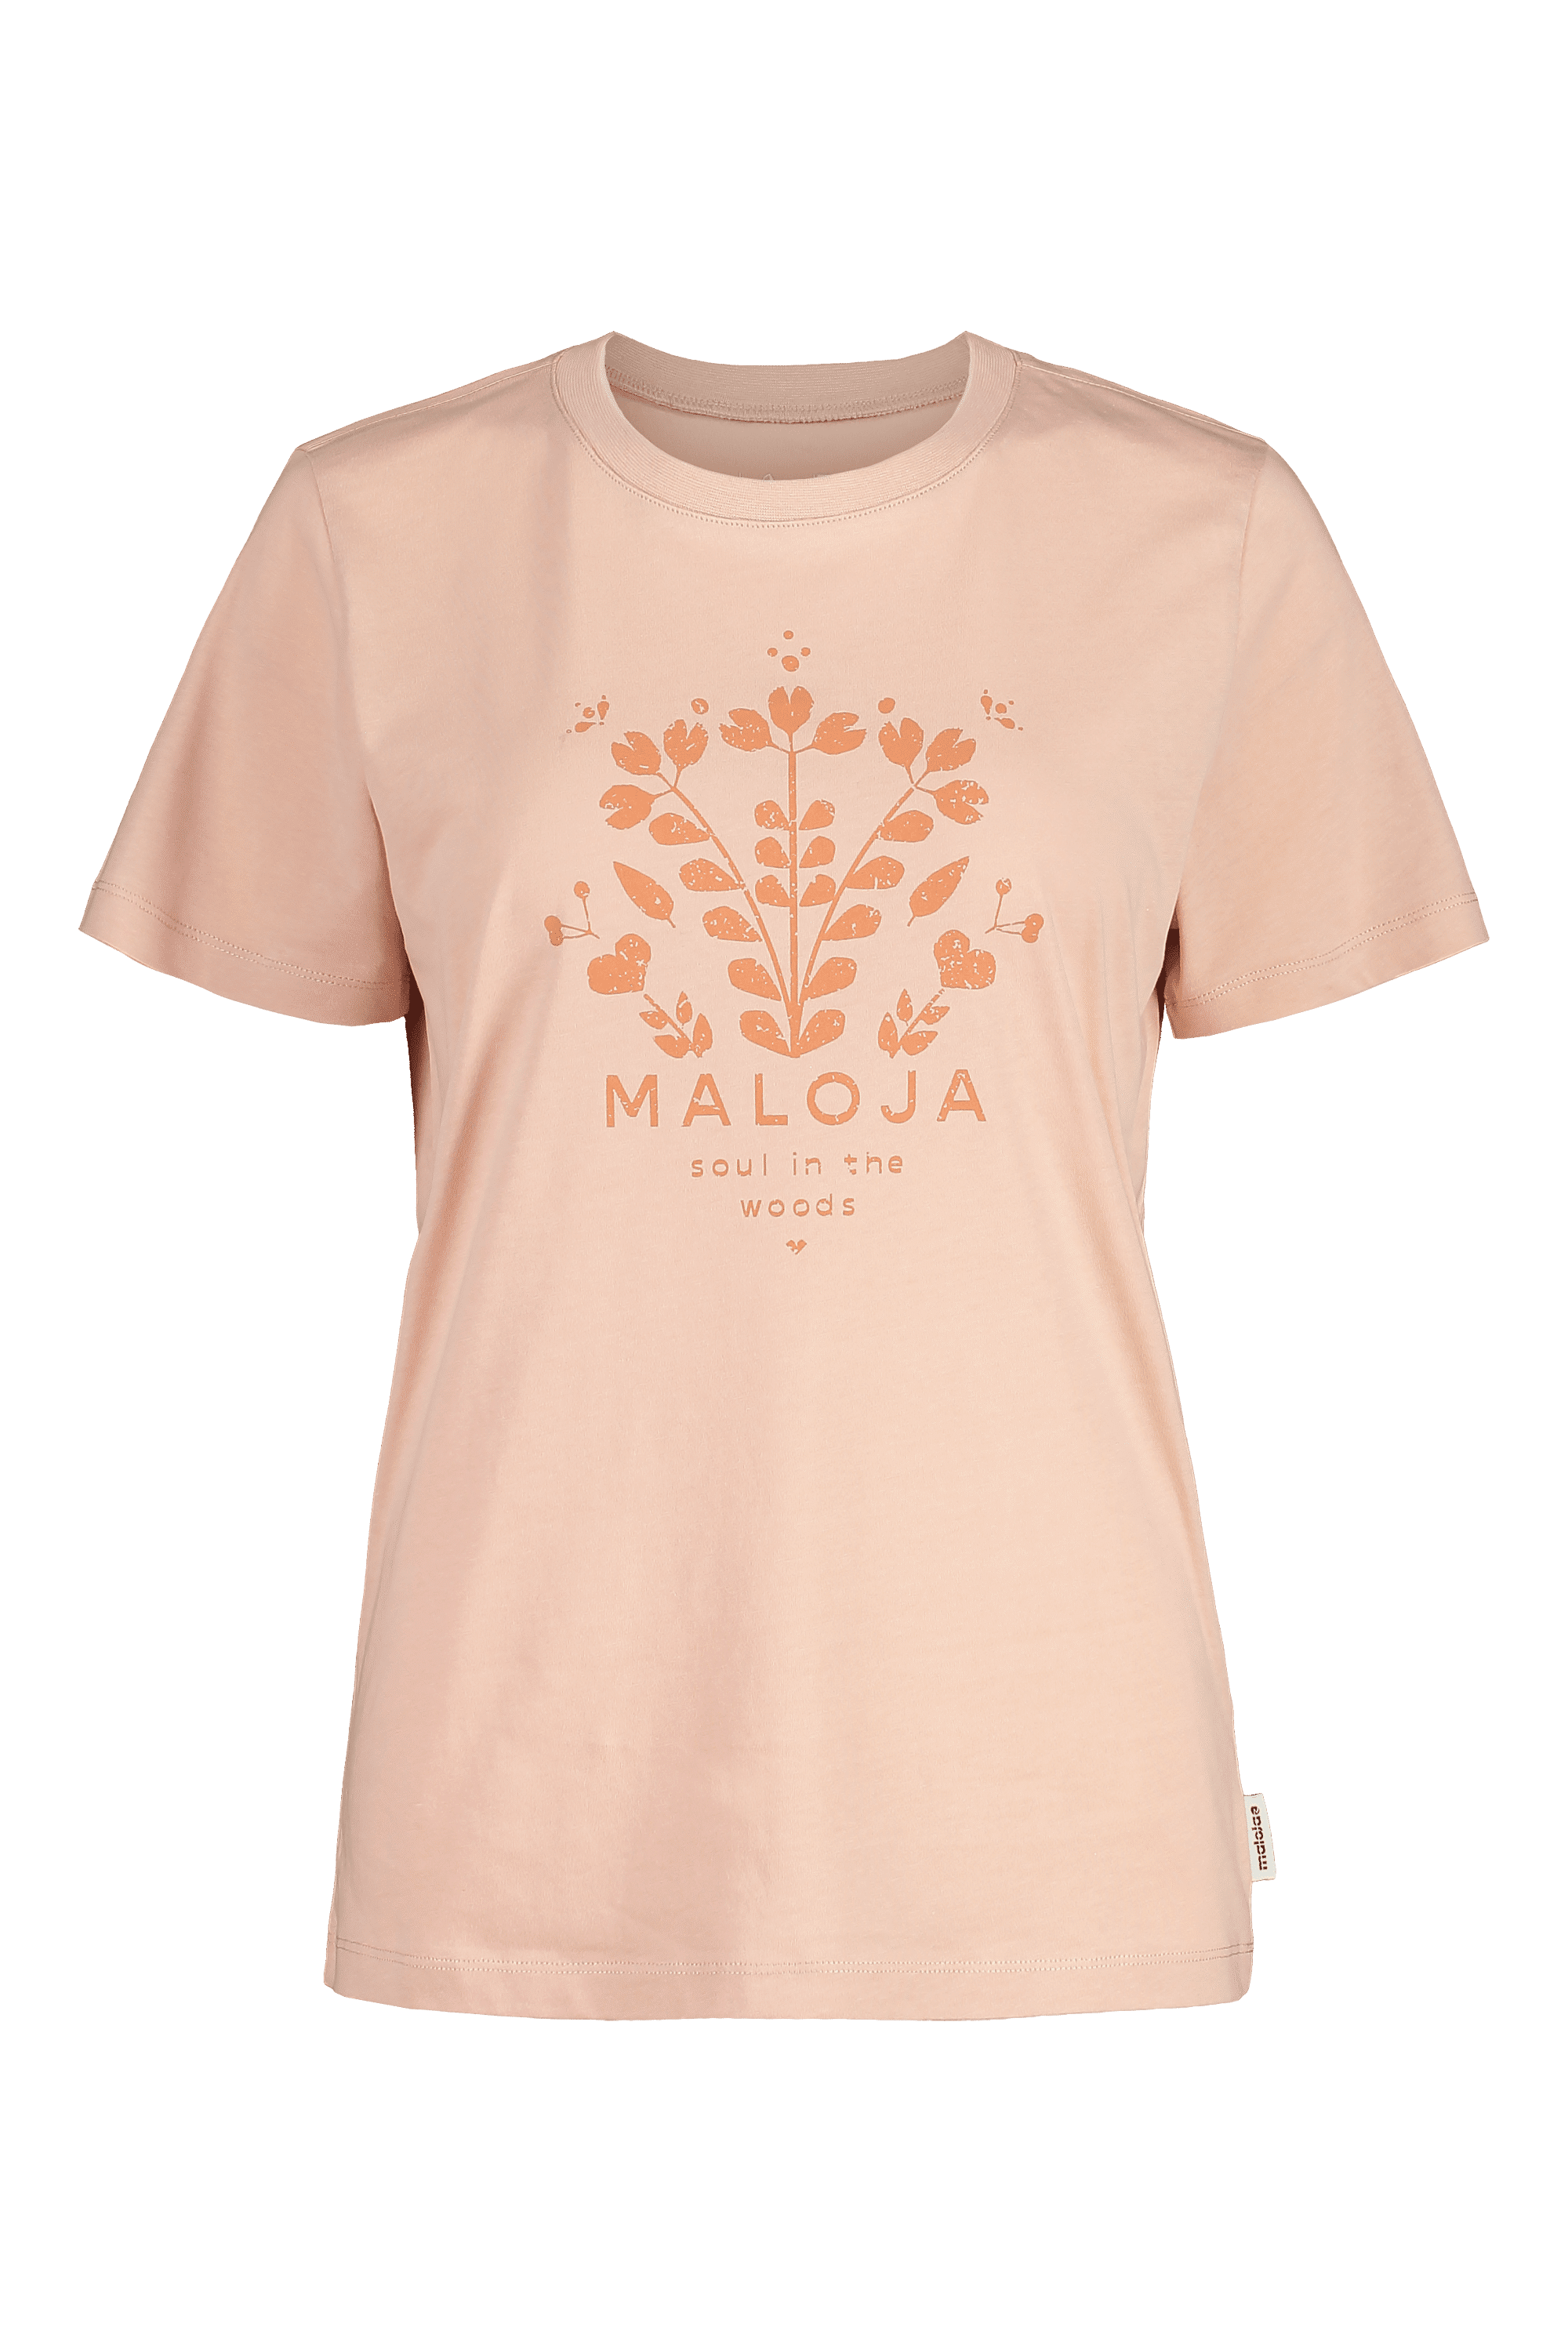 Maloja PlataneM. - T-shirt - Women's